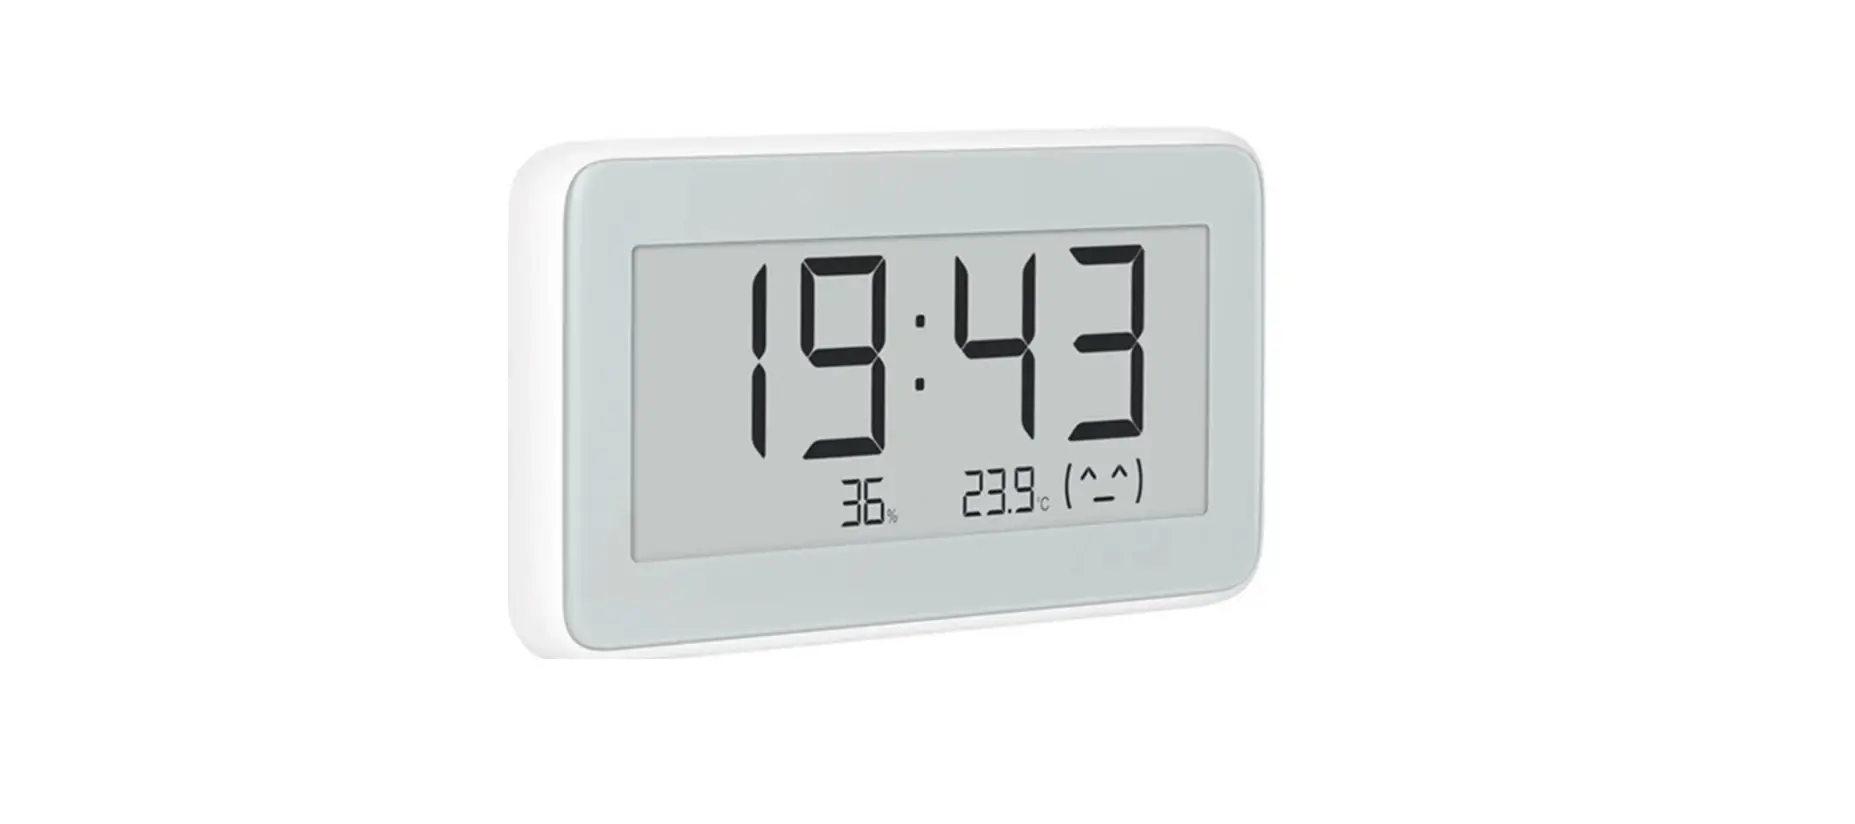 Temperature and Humidity Monitor Clock